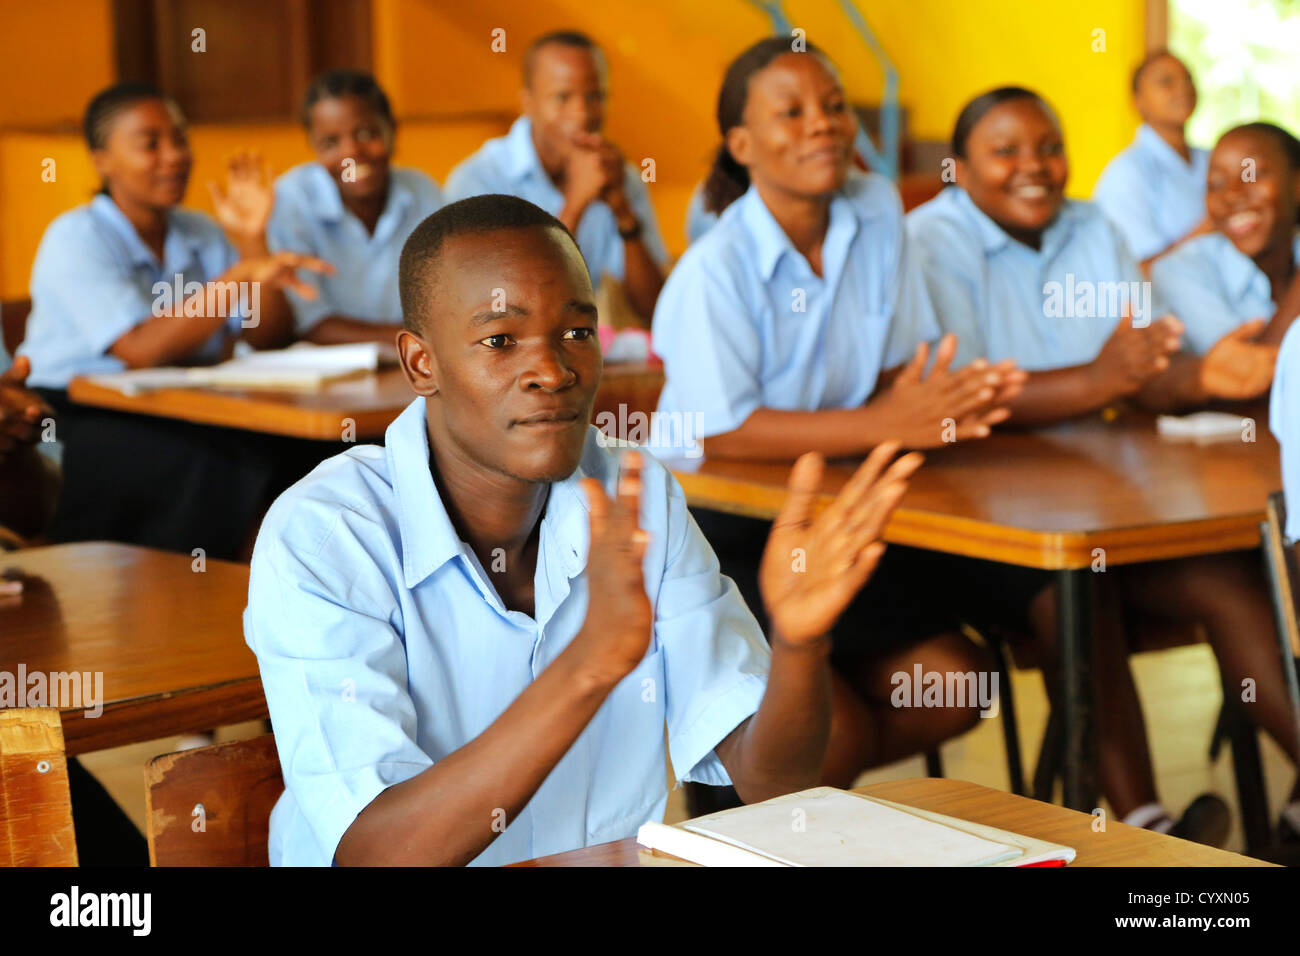 Students in a classroom of a vocational training center, Machui, Zanzibar, Tanzania Stock Photo